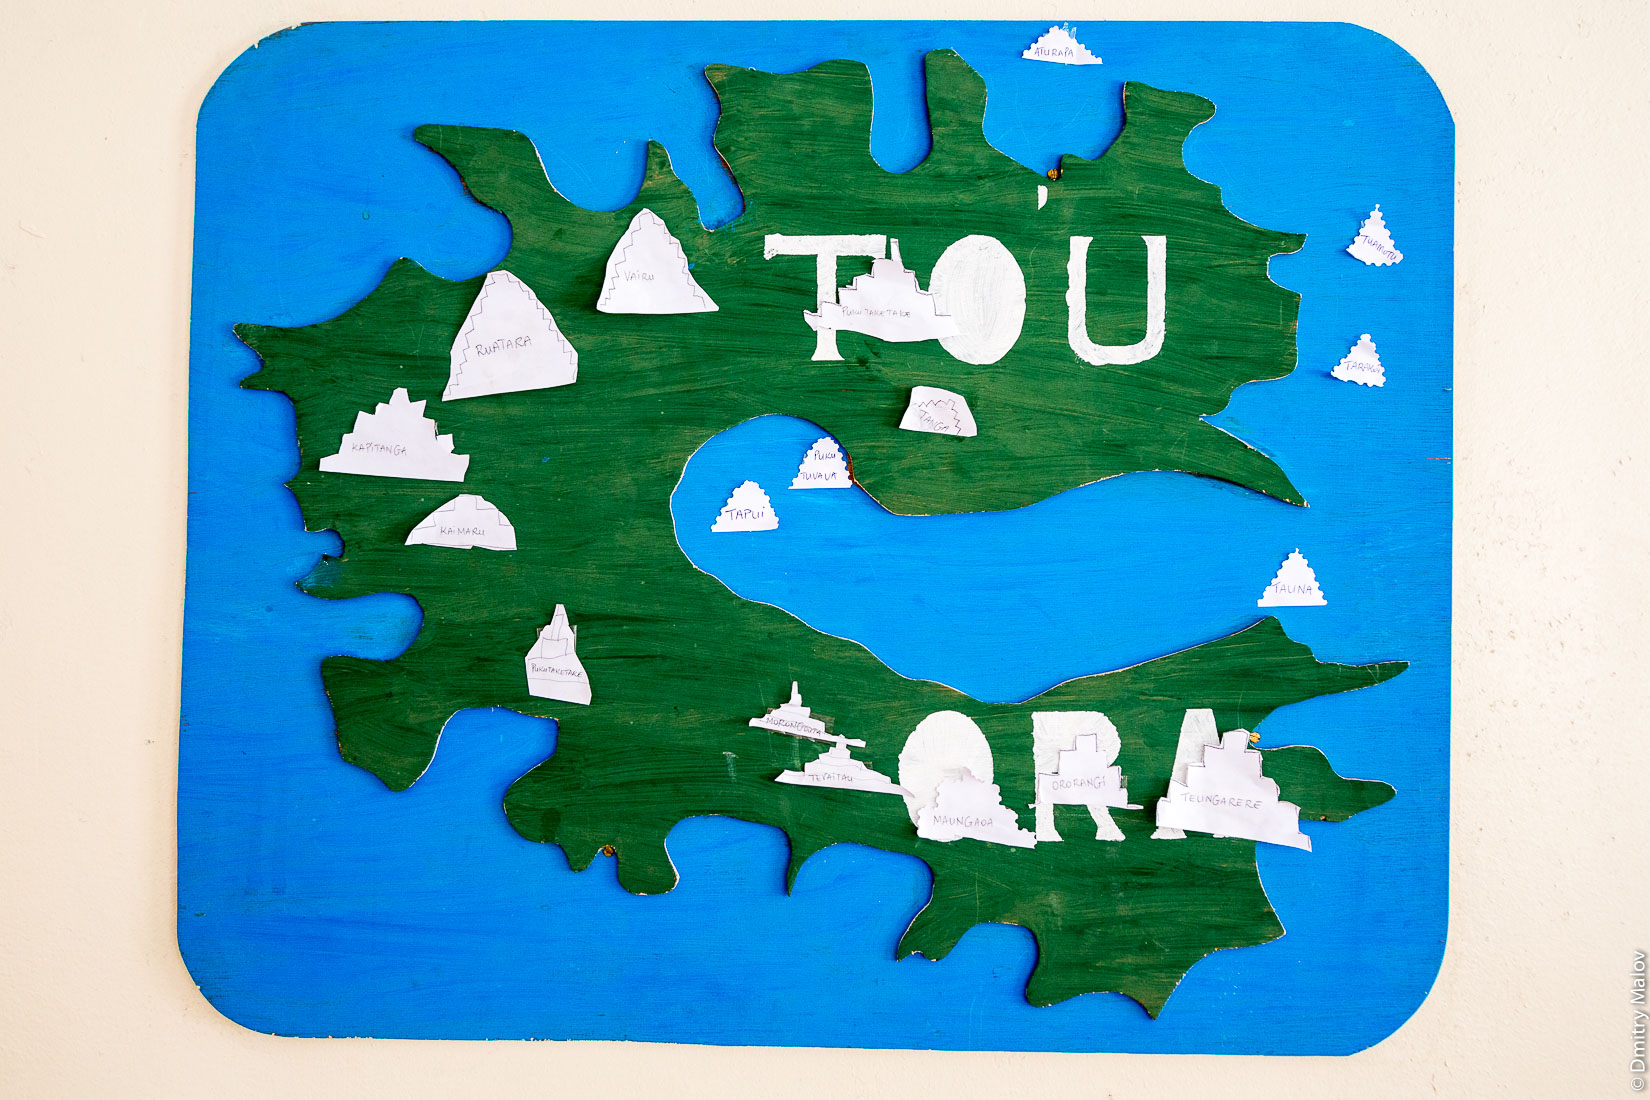 Карта острова Рапа-Ити, школьная работа, архипелаг Басс, Французская Полинезия. A school project — a map of Rapa-Iti, The Bass Islands, French Polynesia.